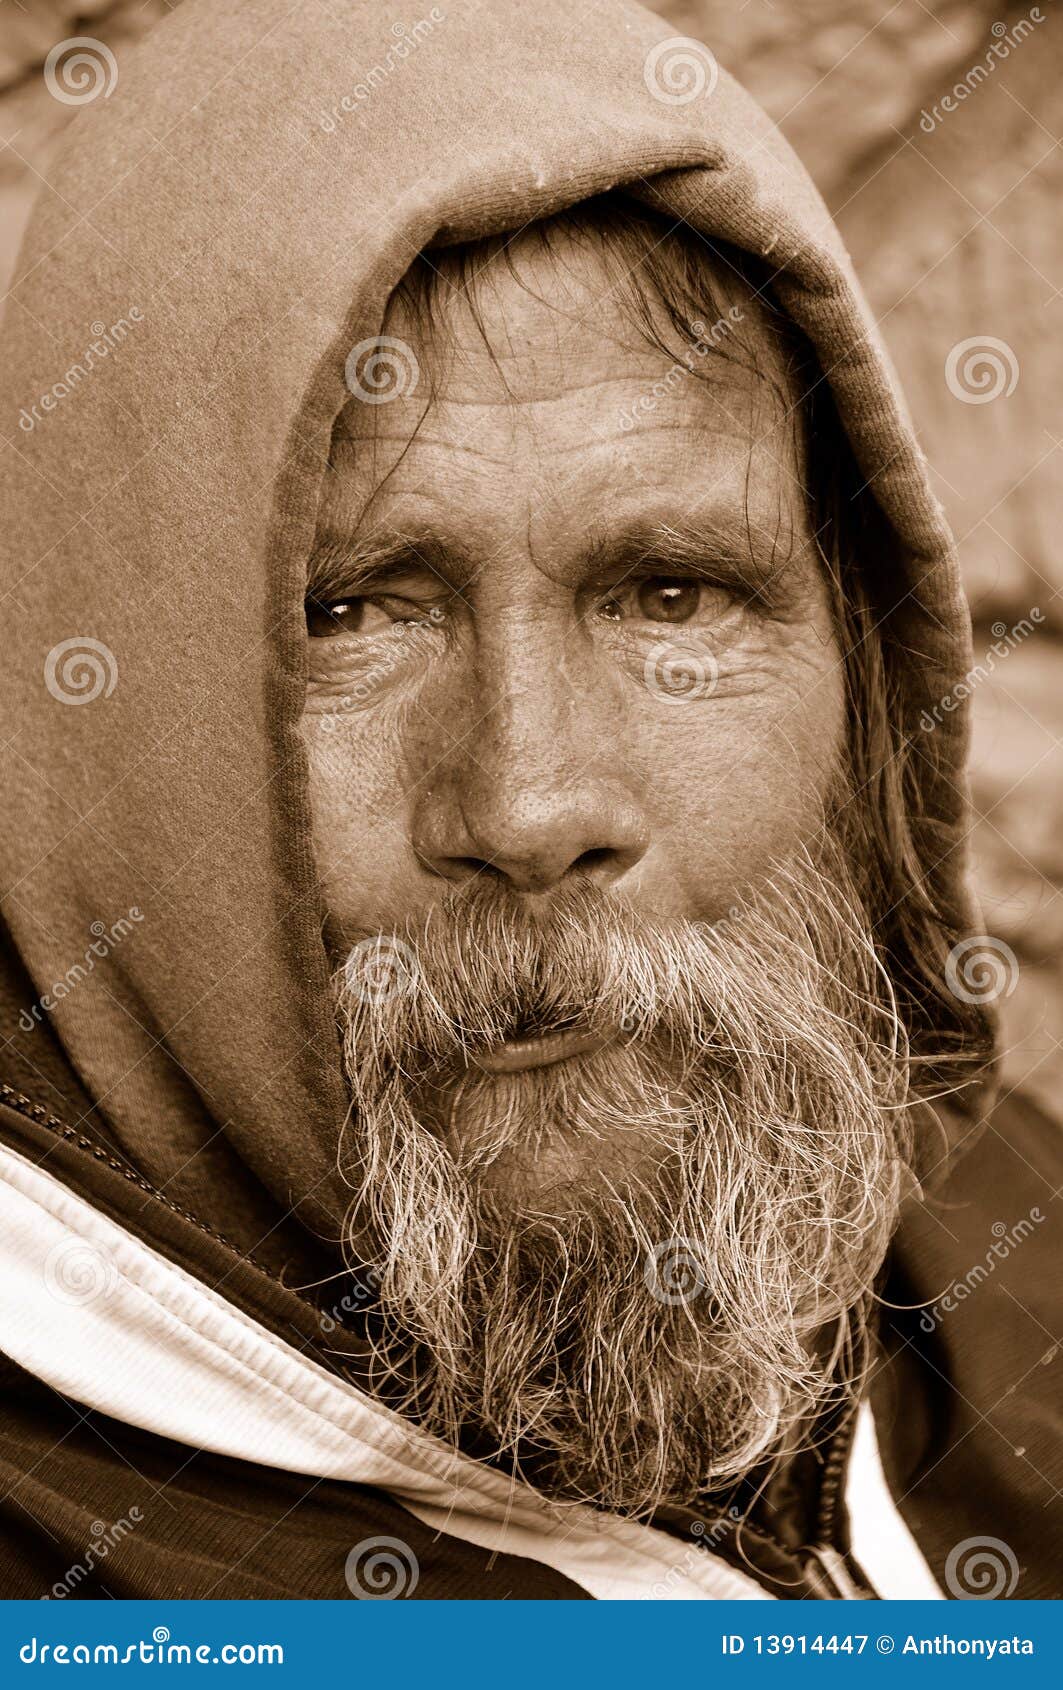 the homeless man look